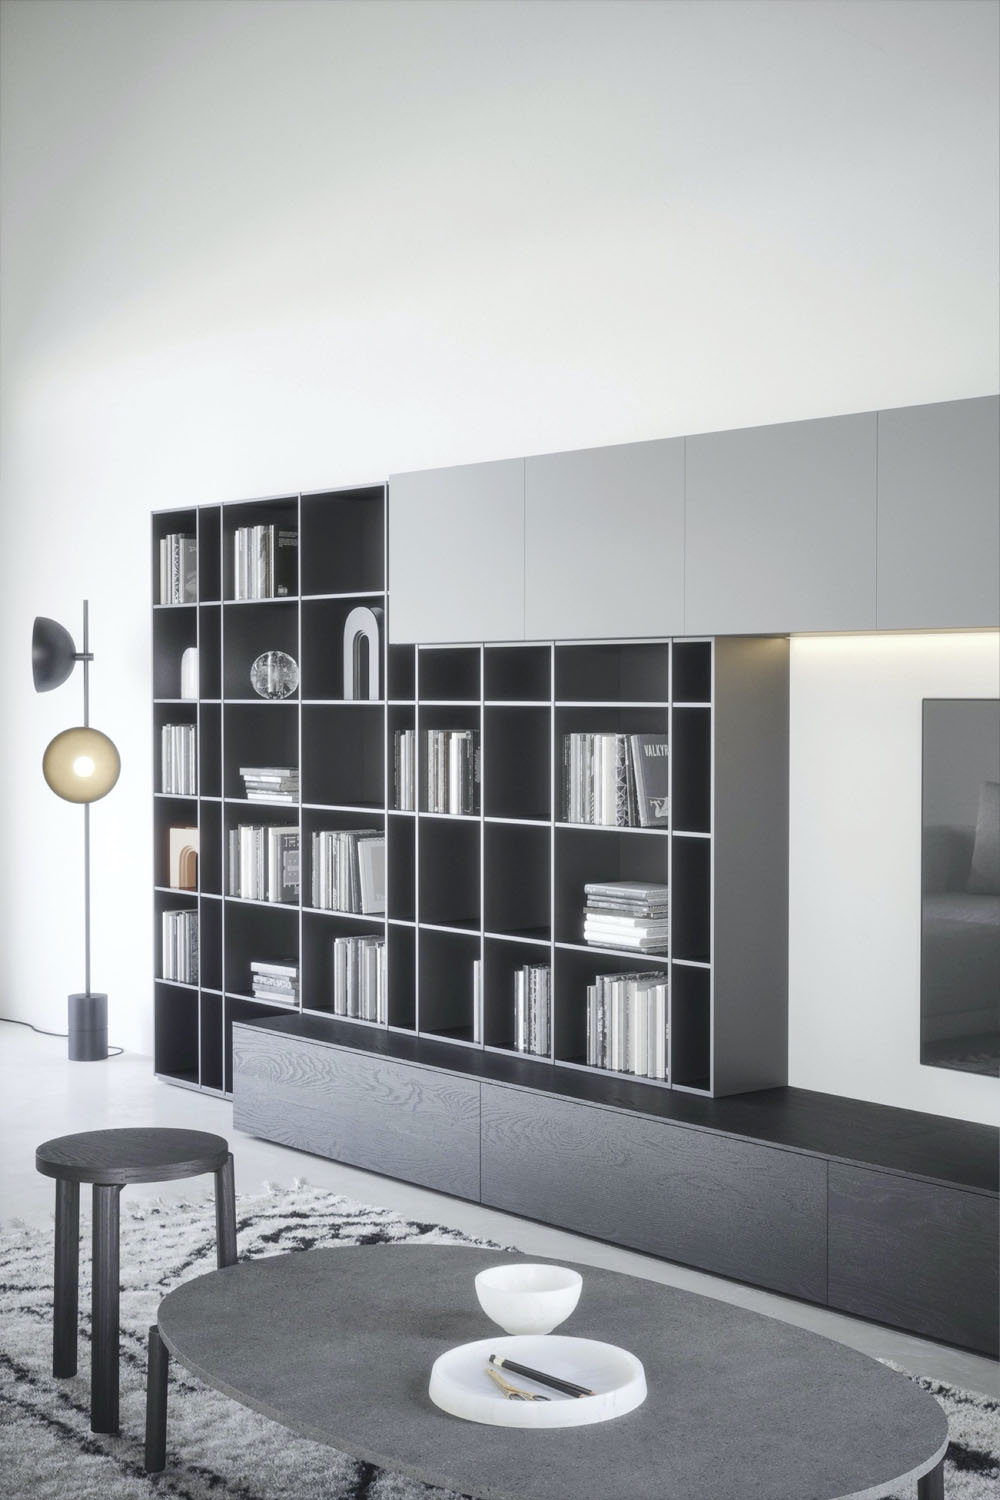 Krieder-wall12-bookcase-lifestyle-002